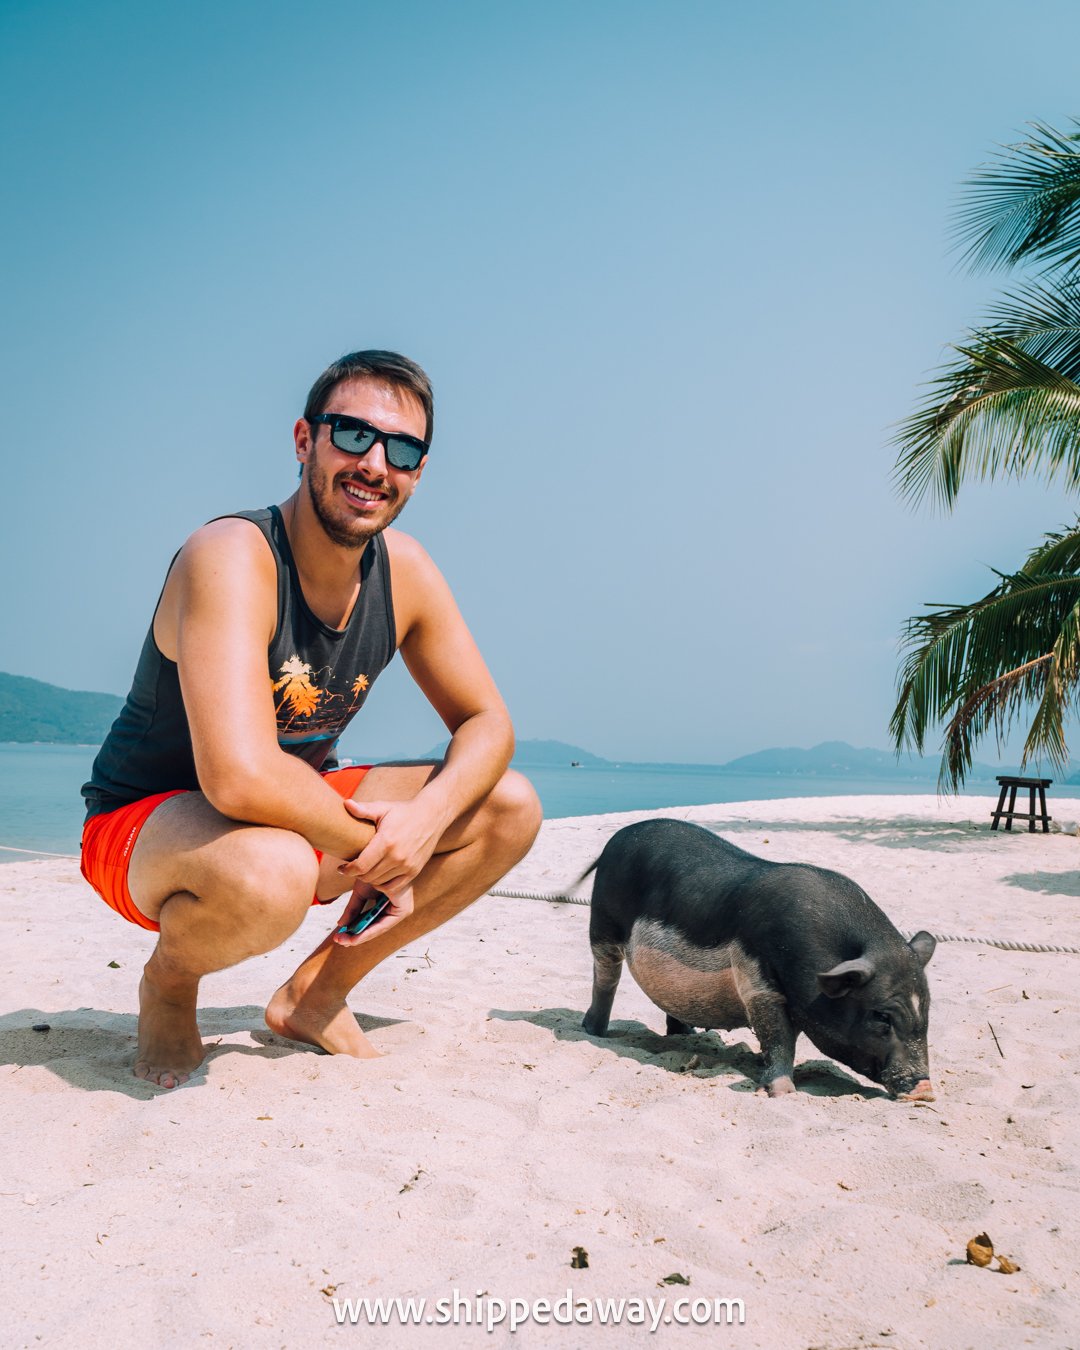 Tourist taking photo with a pig on Pig Island, Koh Samui, Thailand